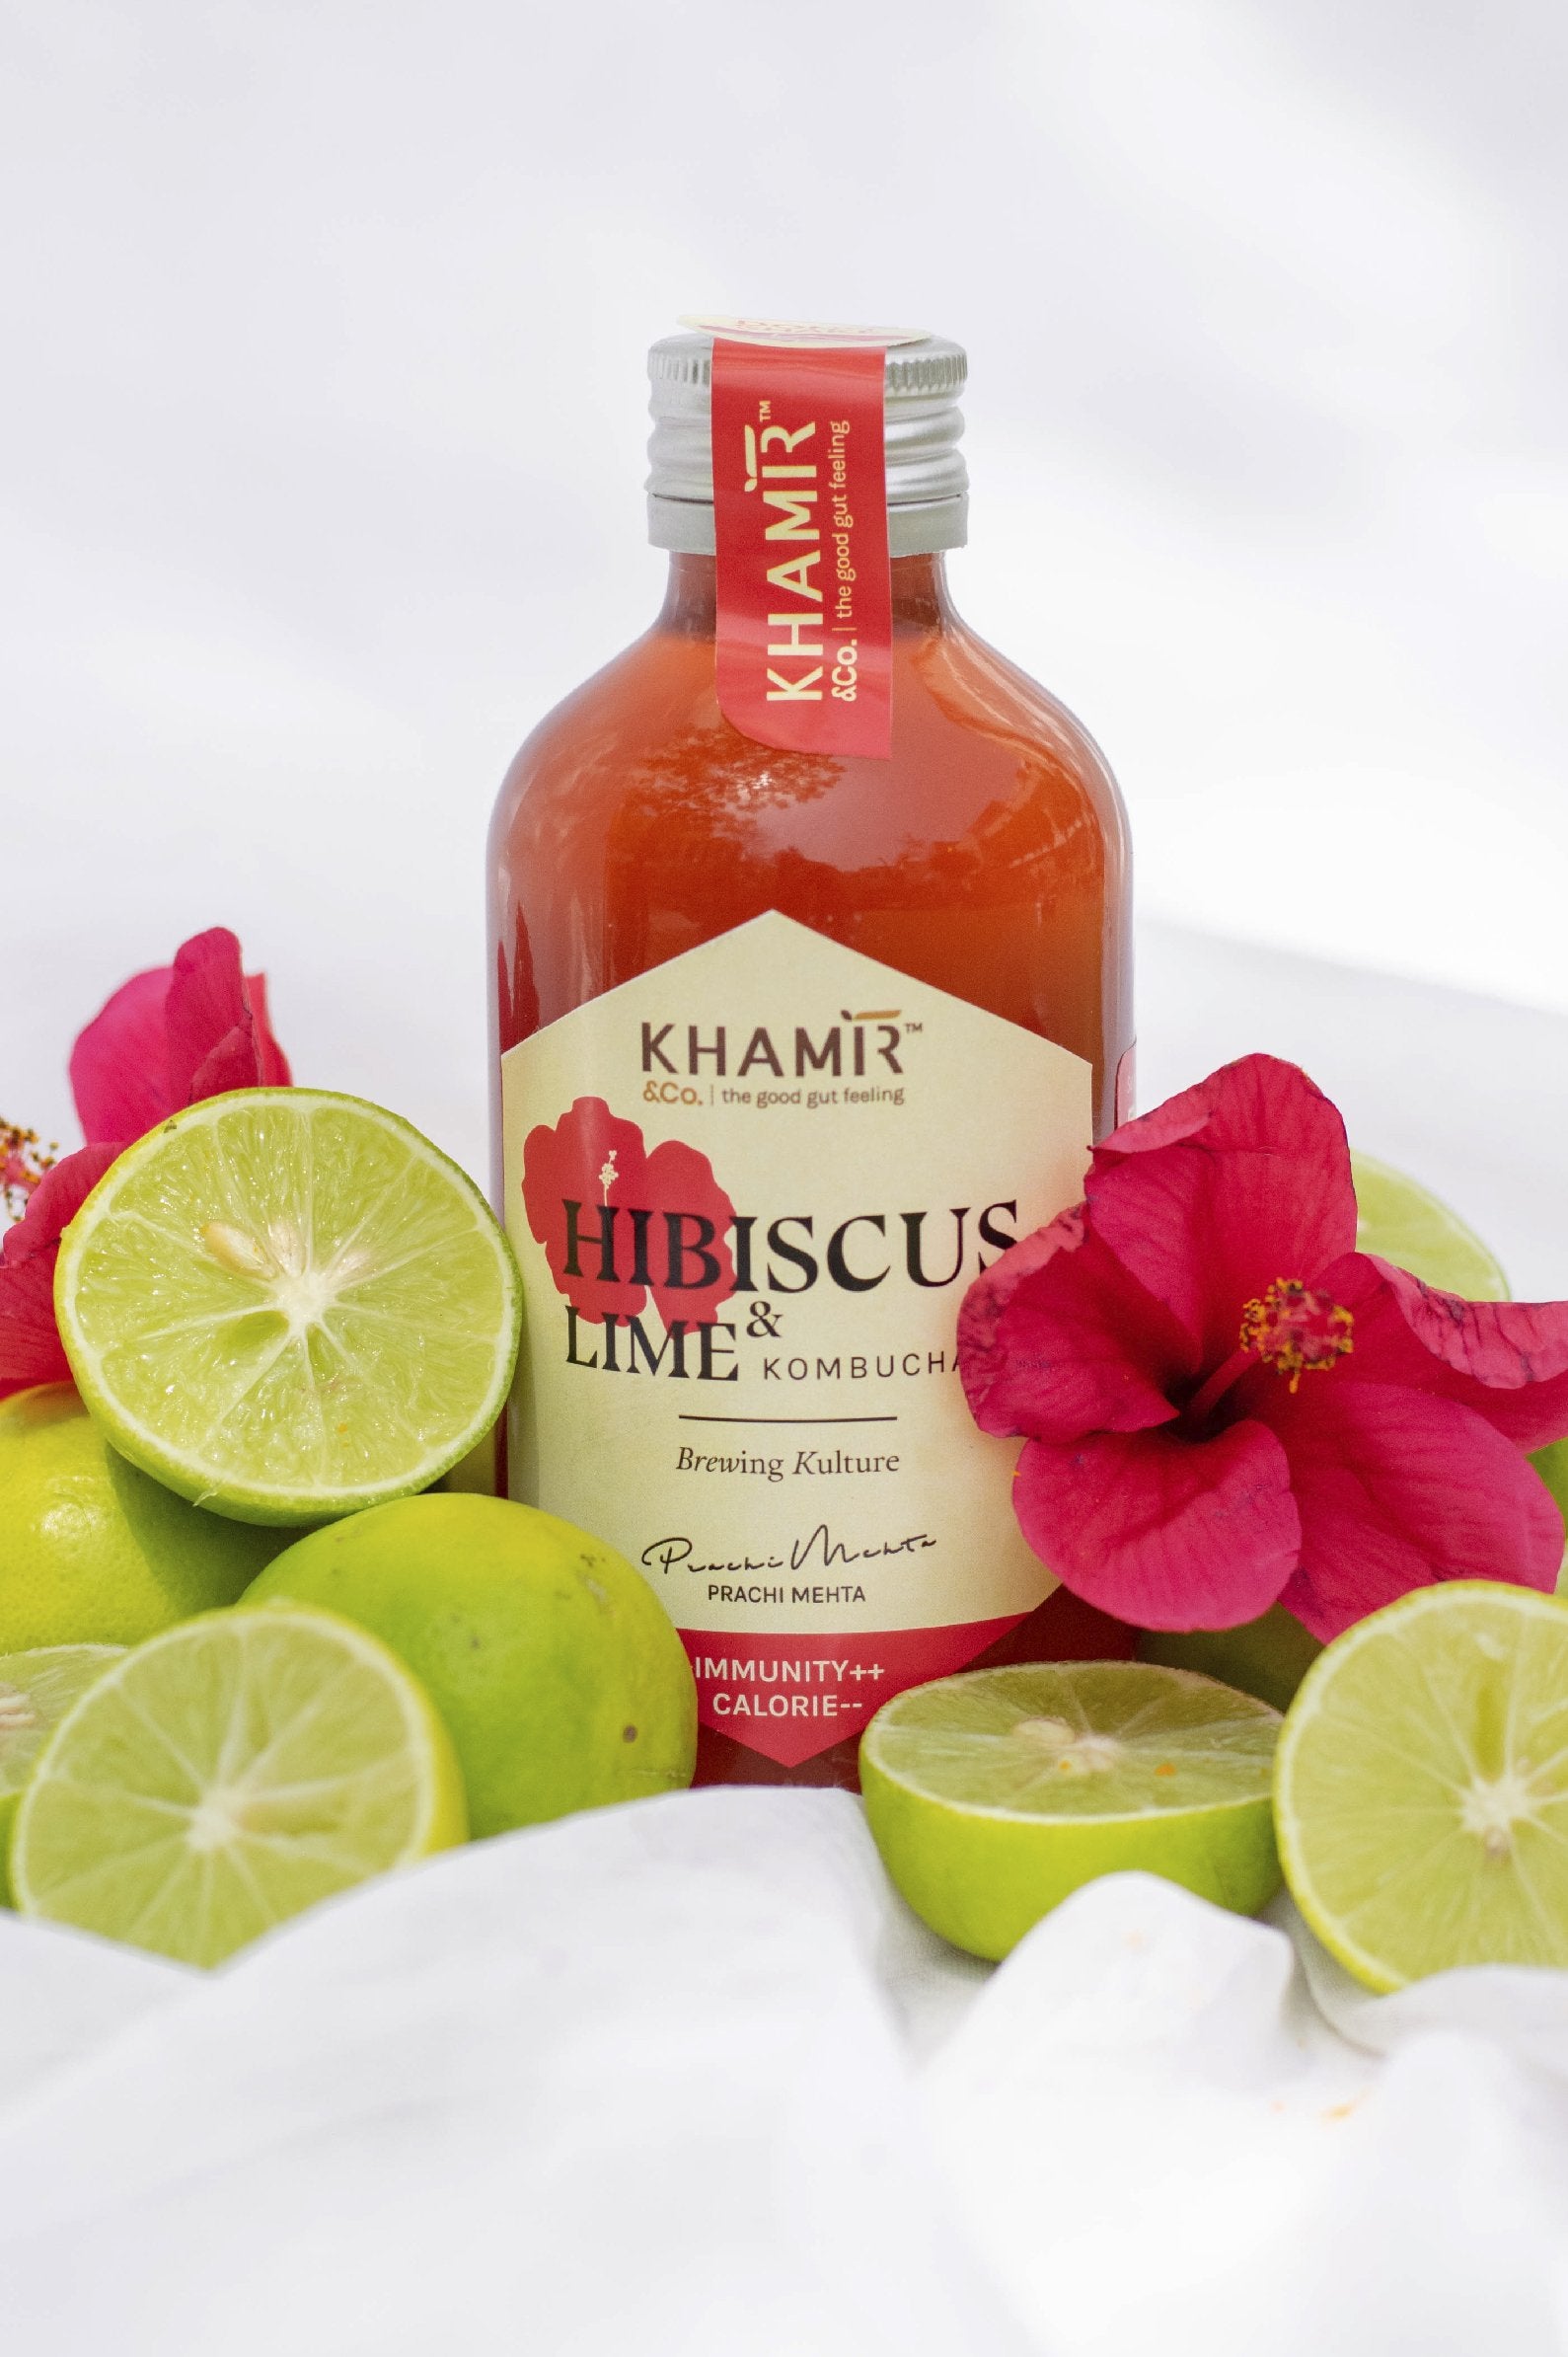 Khamir's Hibiscus & Lime Kombucha